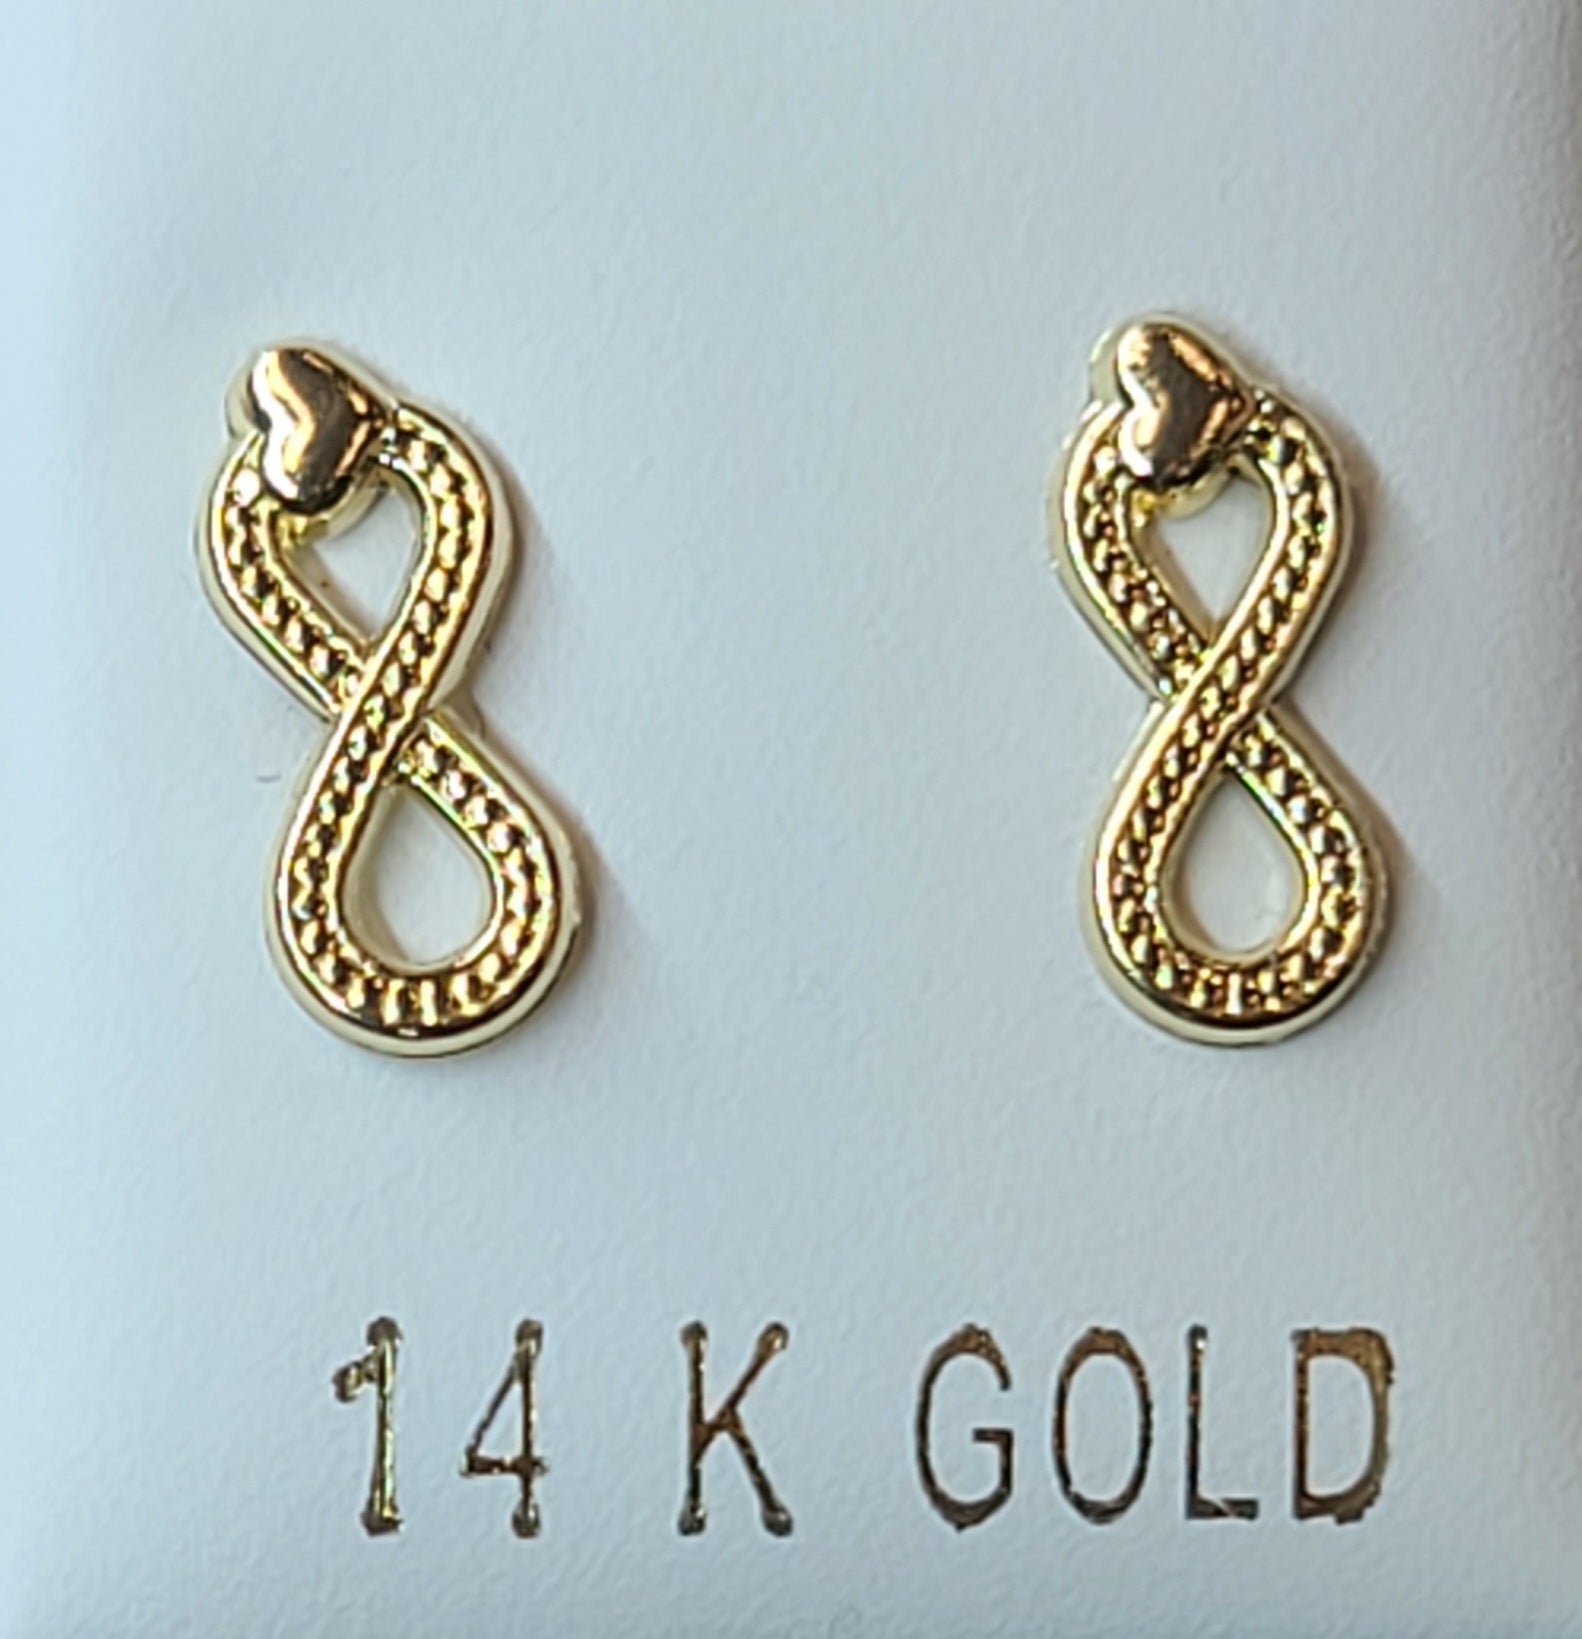 14k Yellow Gold Infinity Sign Earrings